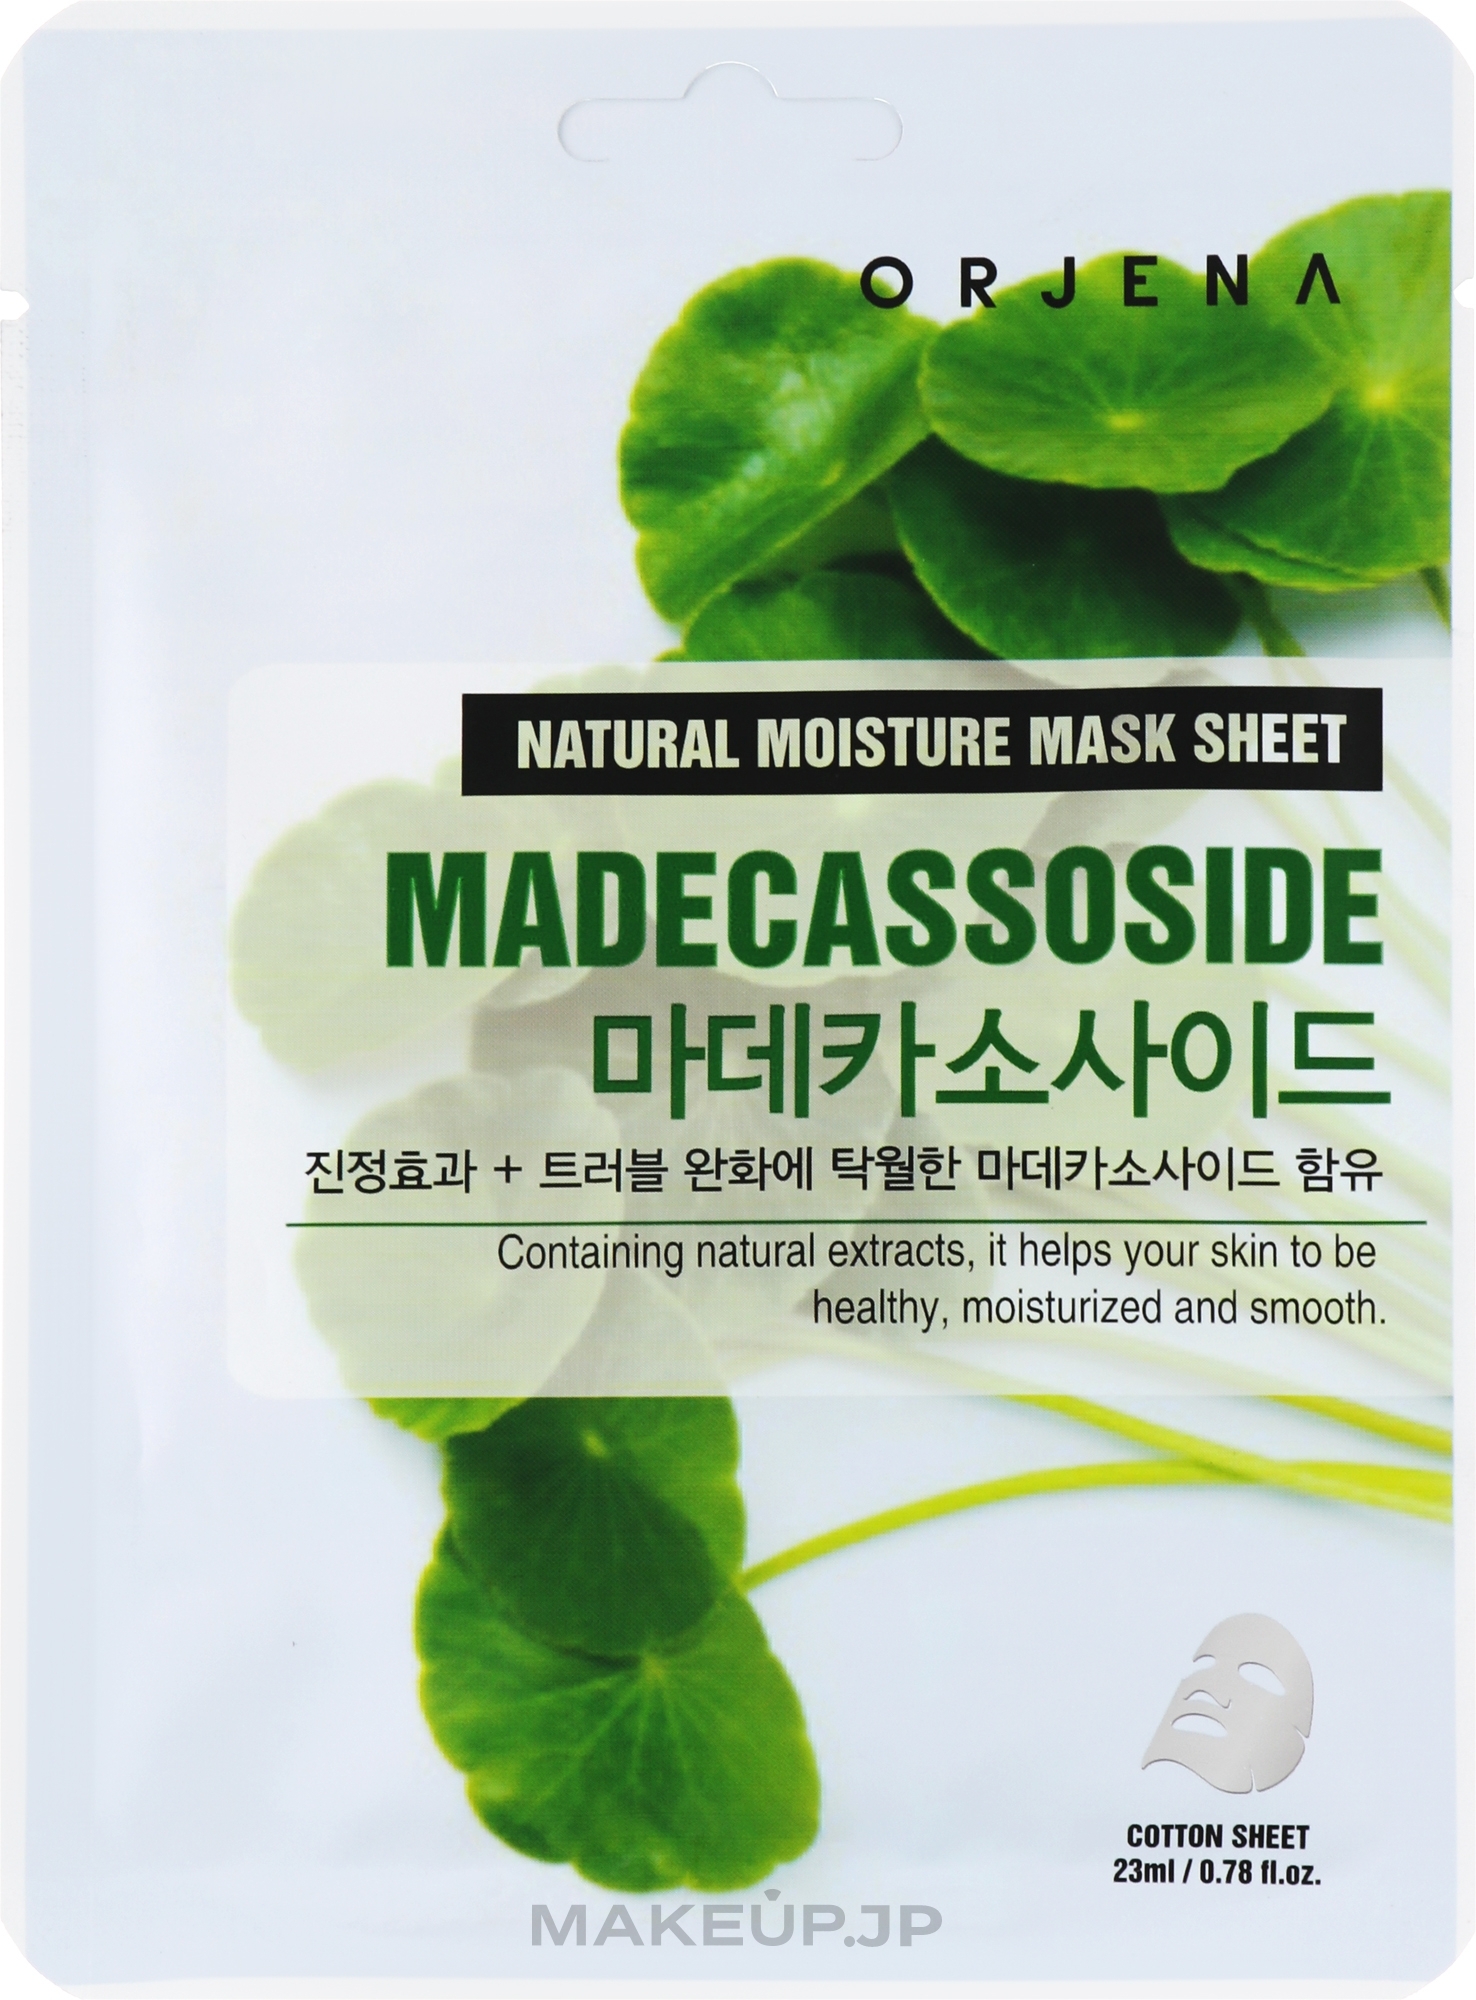 Centella Asiatica Sheet Mask - Orjena Natural Moisture Madecassoside Mask Sheet — photo 23 ml